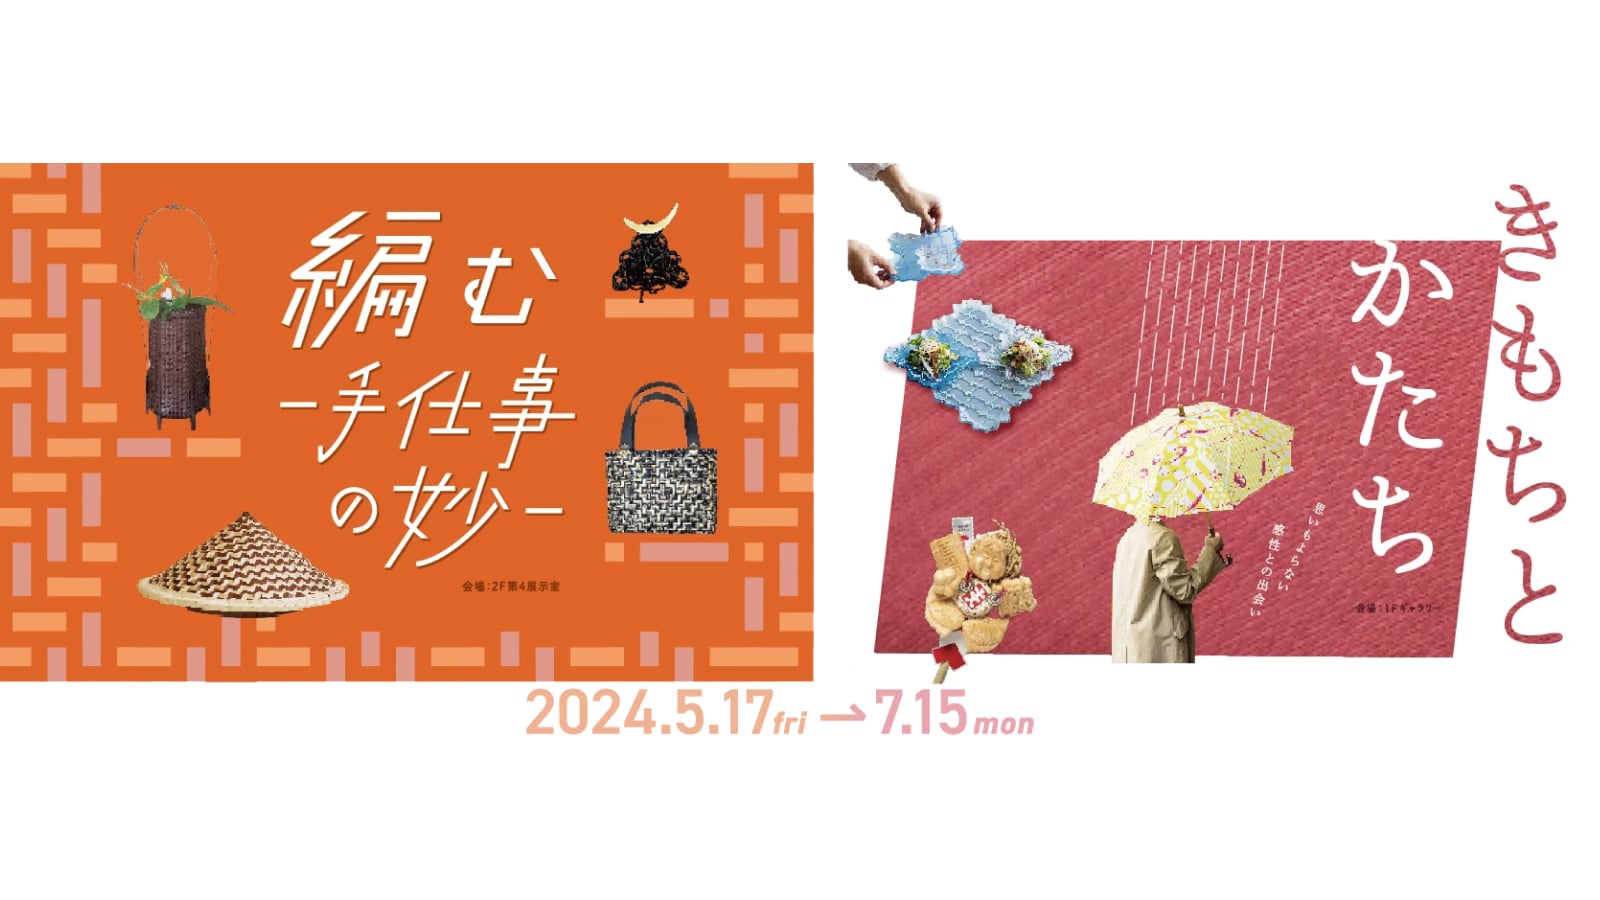 「ISHIKAWA DESIGN CENTER SELECTION2023-2024」「Knitting work – The wonders of handiwork -」